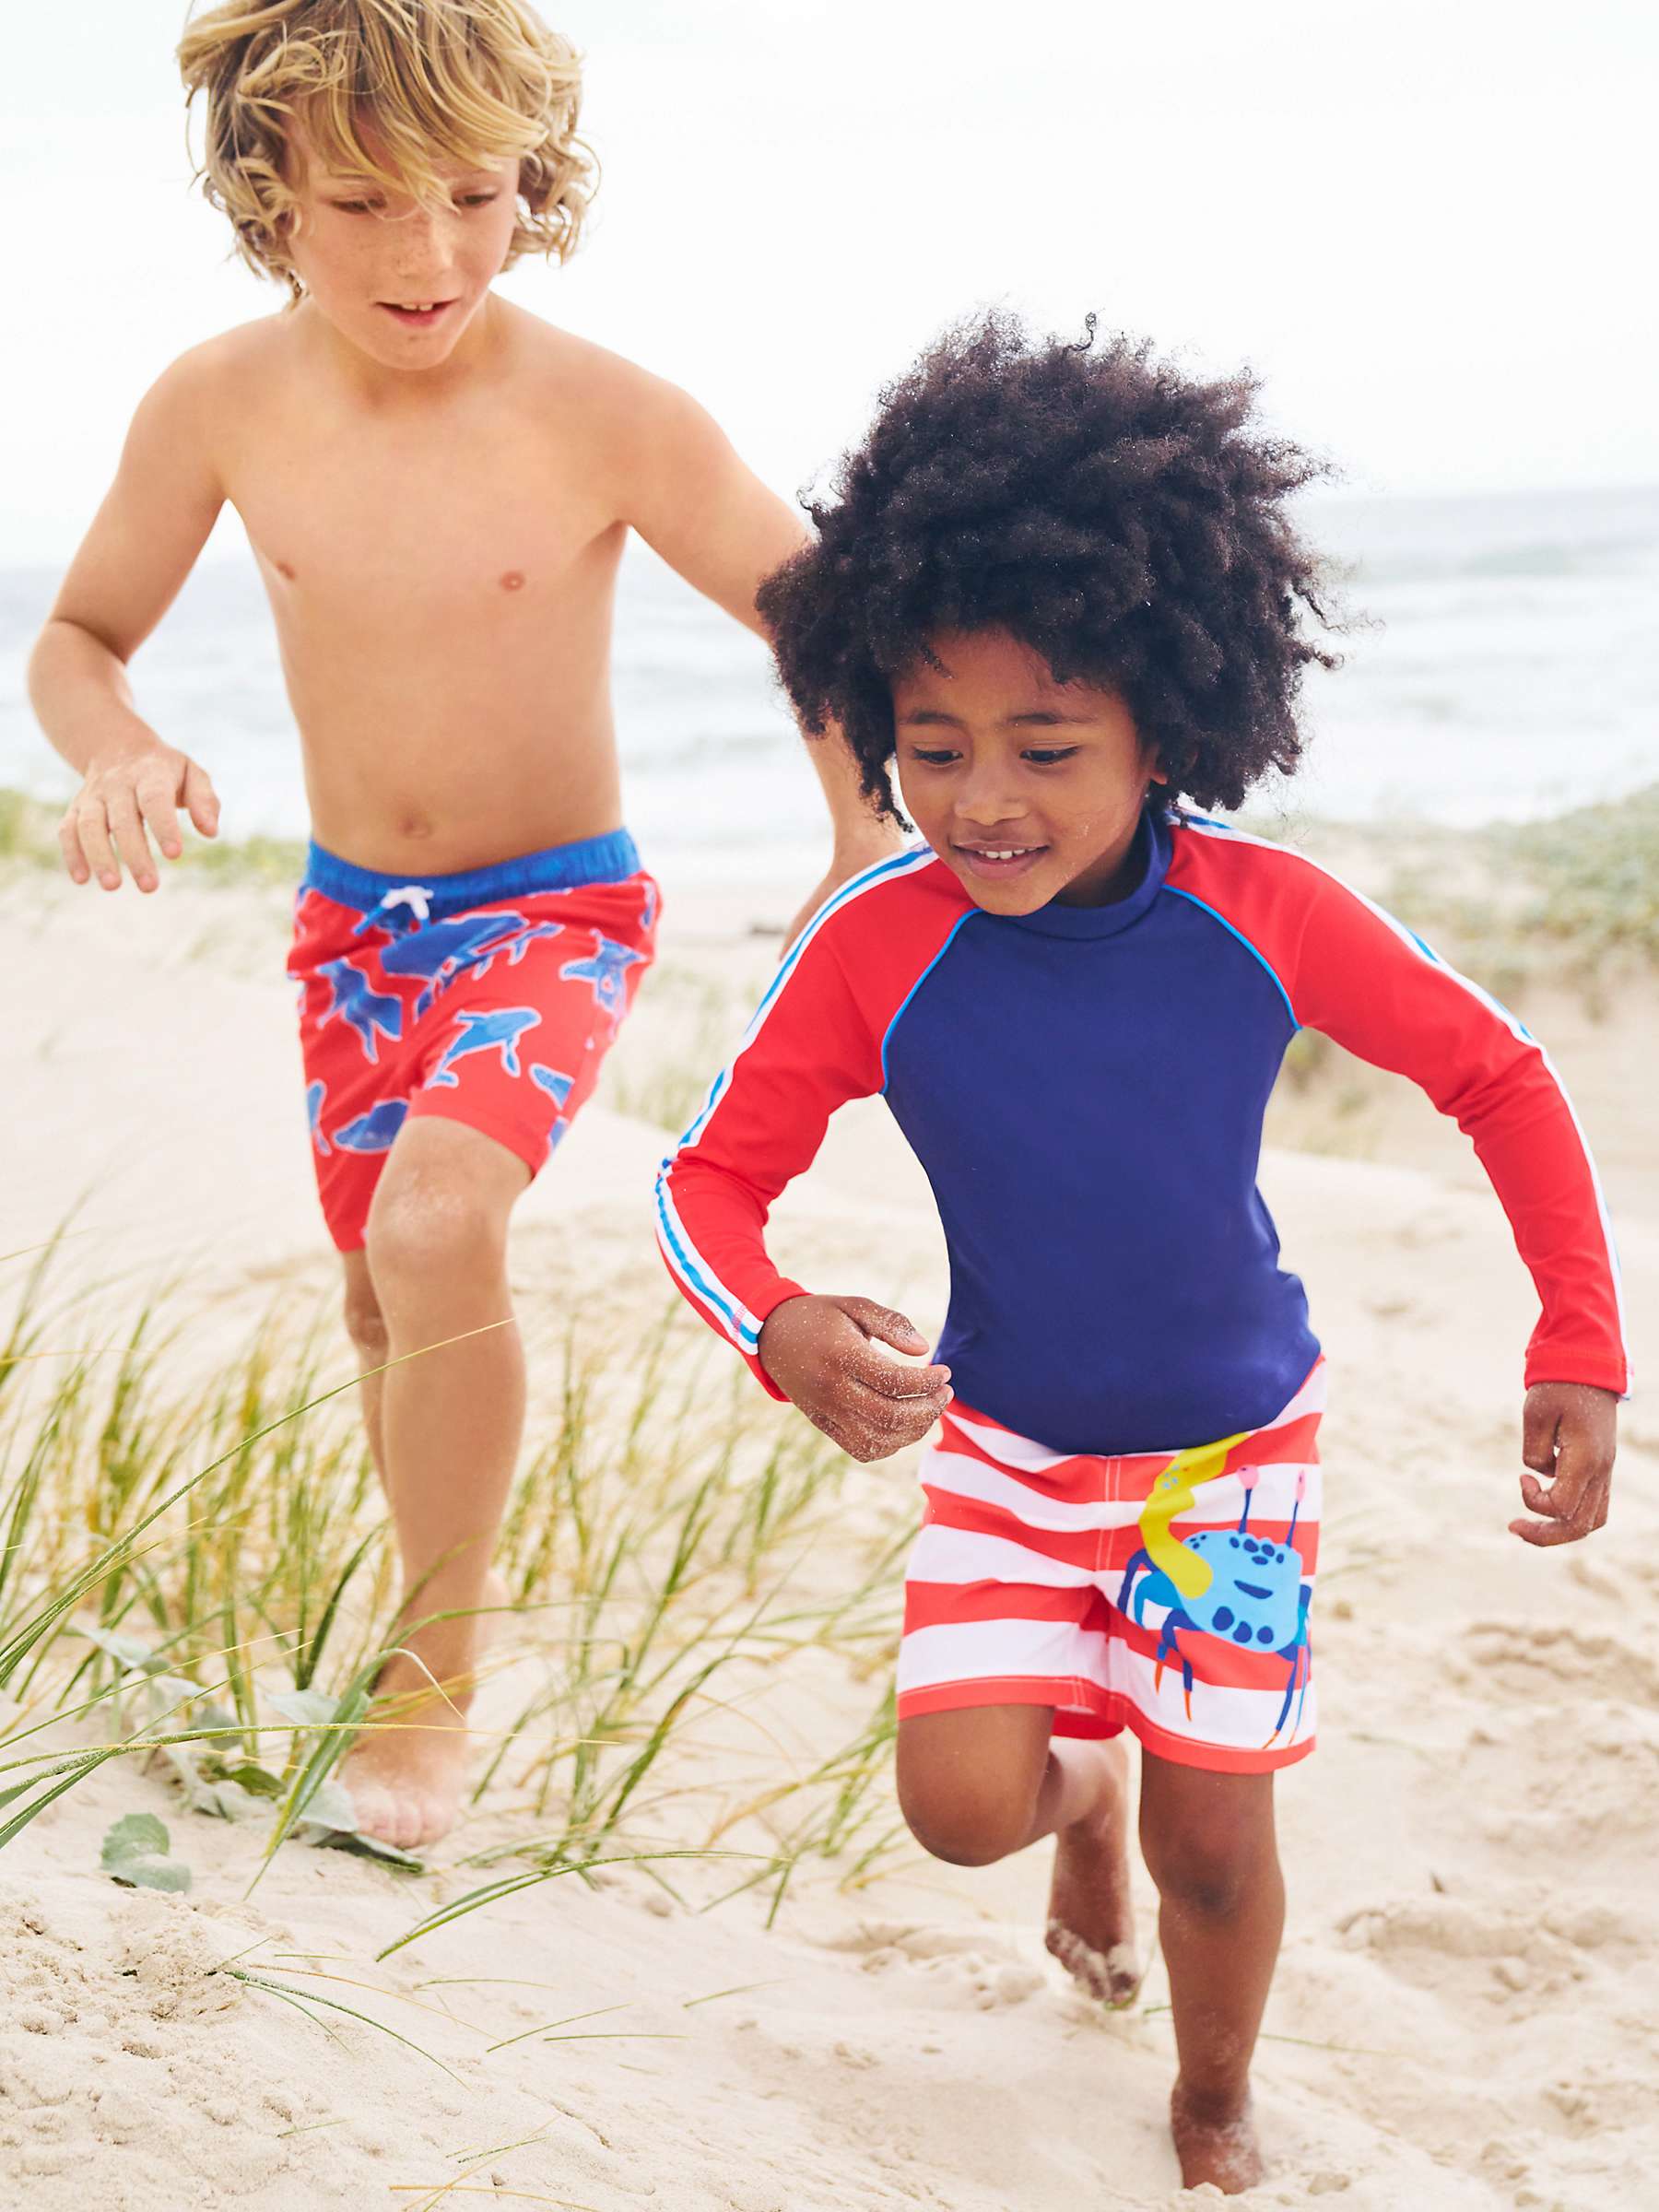 Buy Mini Boden Kids' Crab Stripe Swim Shorts, Red/White Online at johnlewis.com